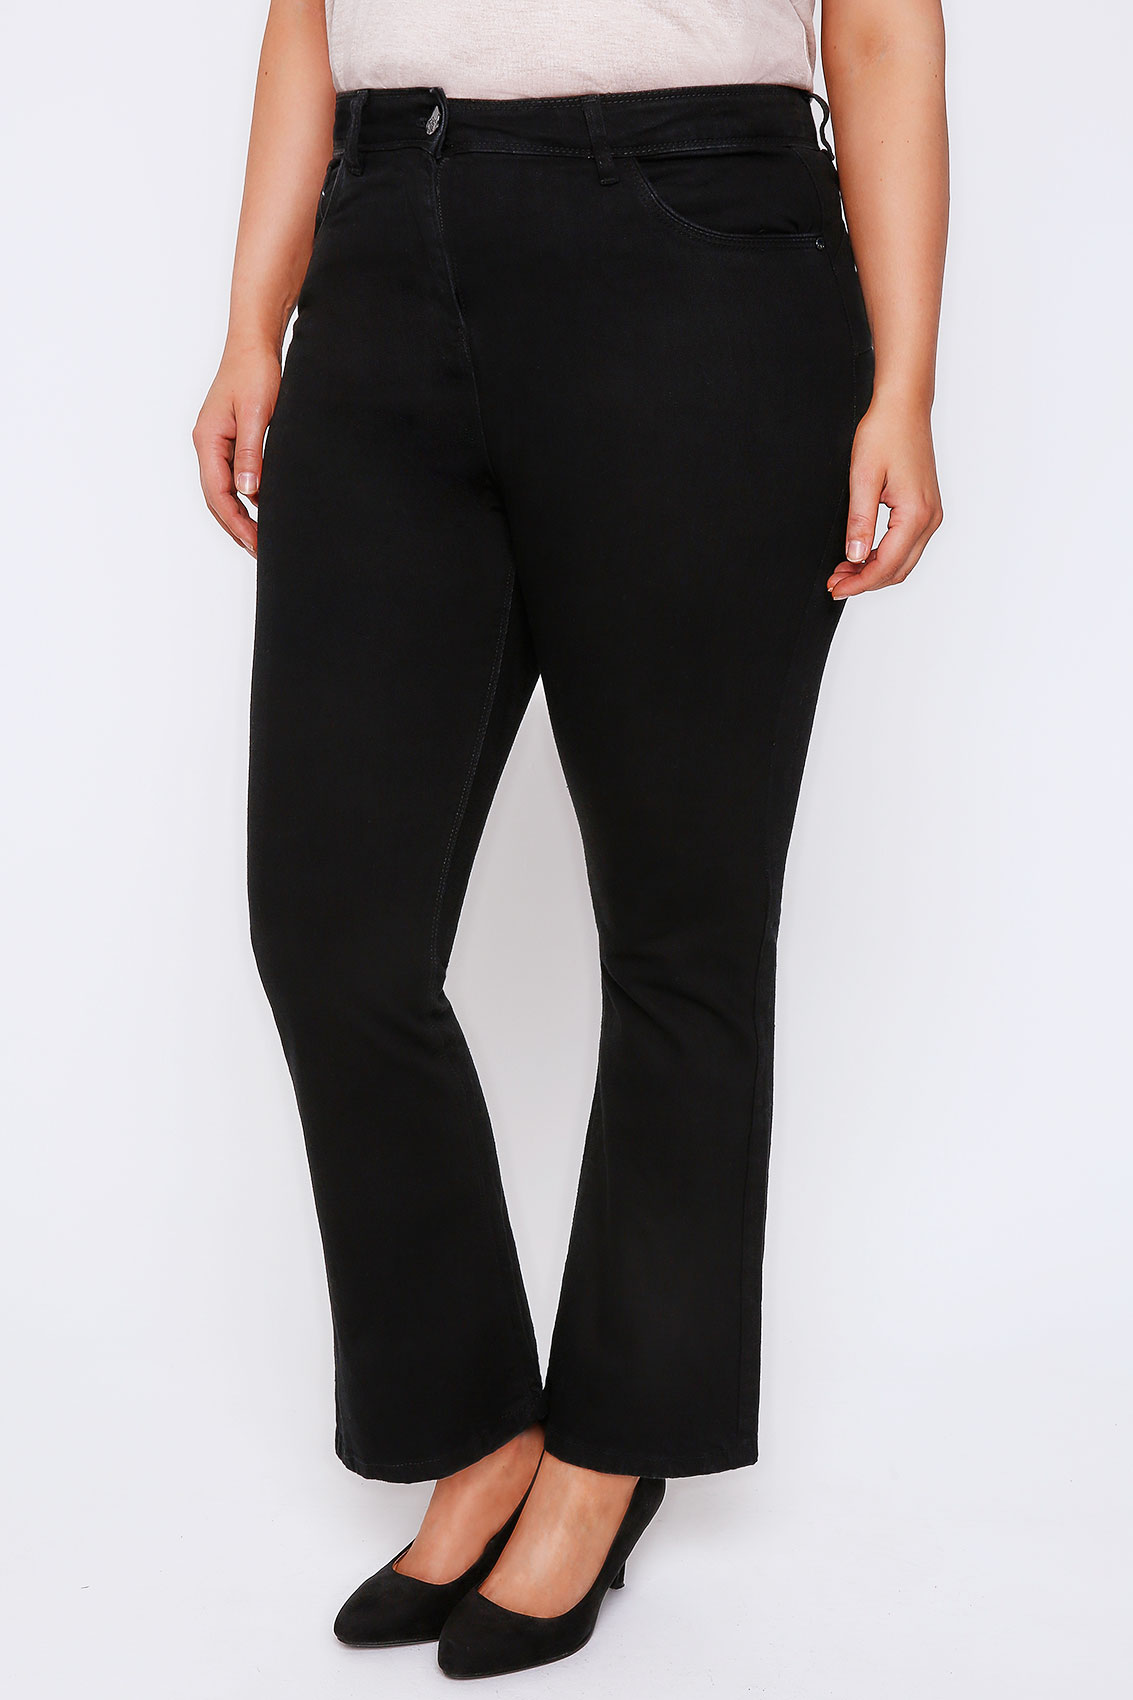 Black Bootcut SHAPER Jeans Plus Size 16 to 28